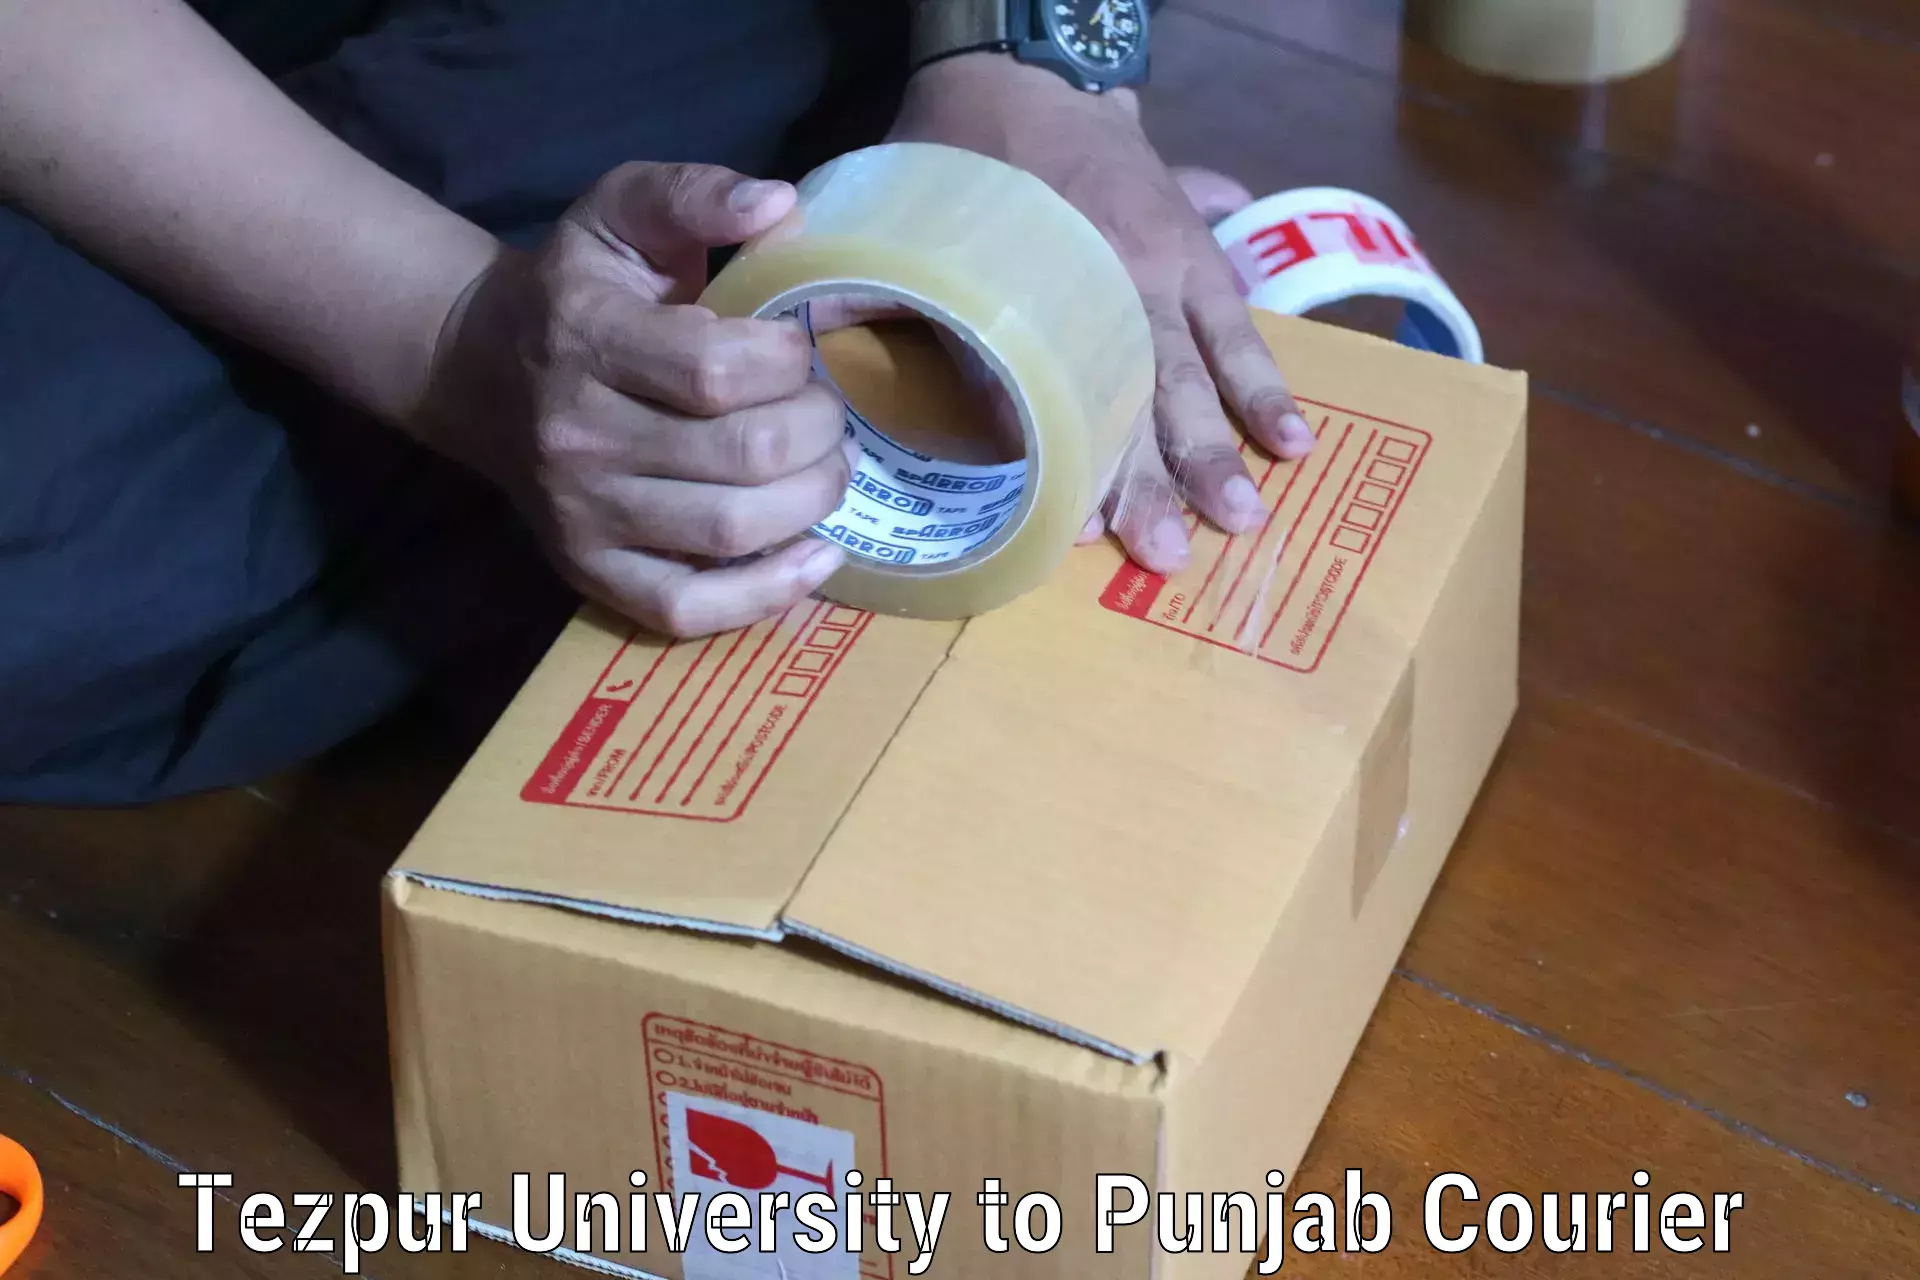 Courier service booking Tezpur University to Machhiwara